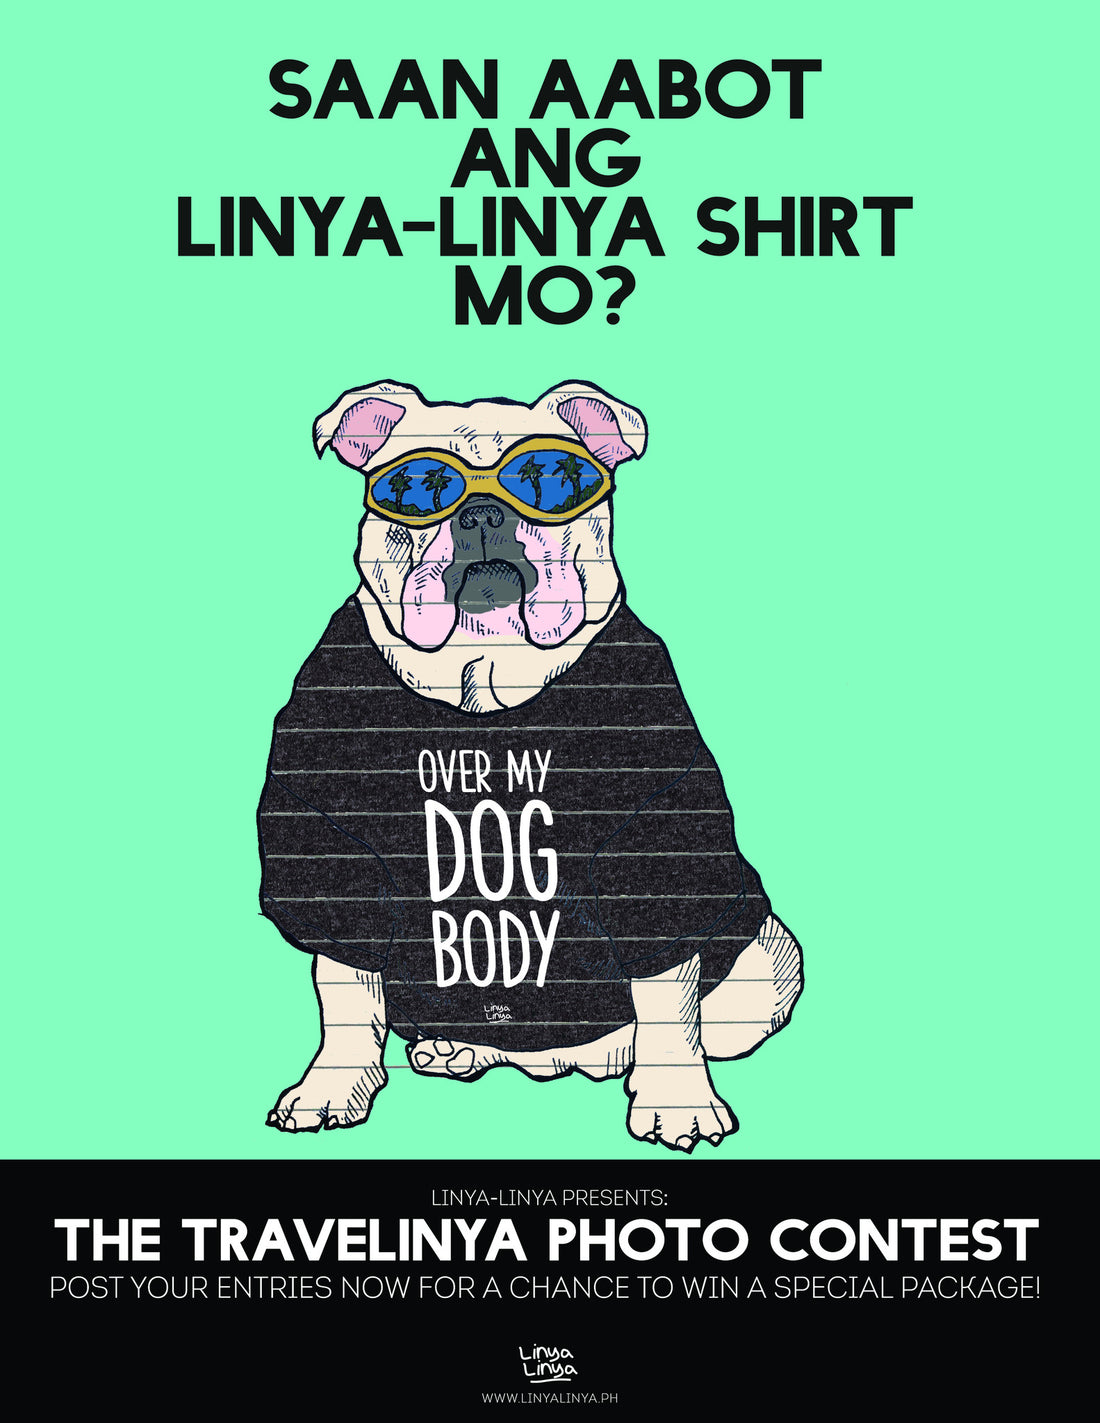 Linya-Linya Presents: The TRAVELINYA PHOTO CONTEST!